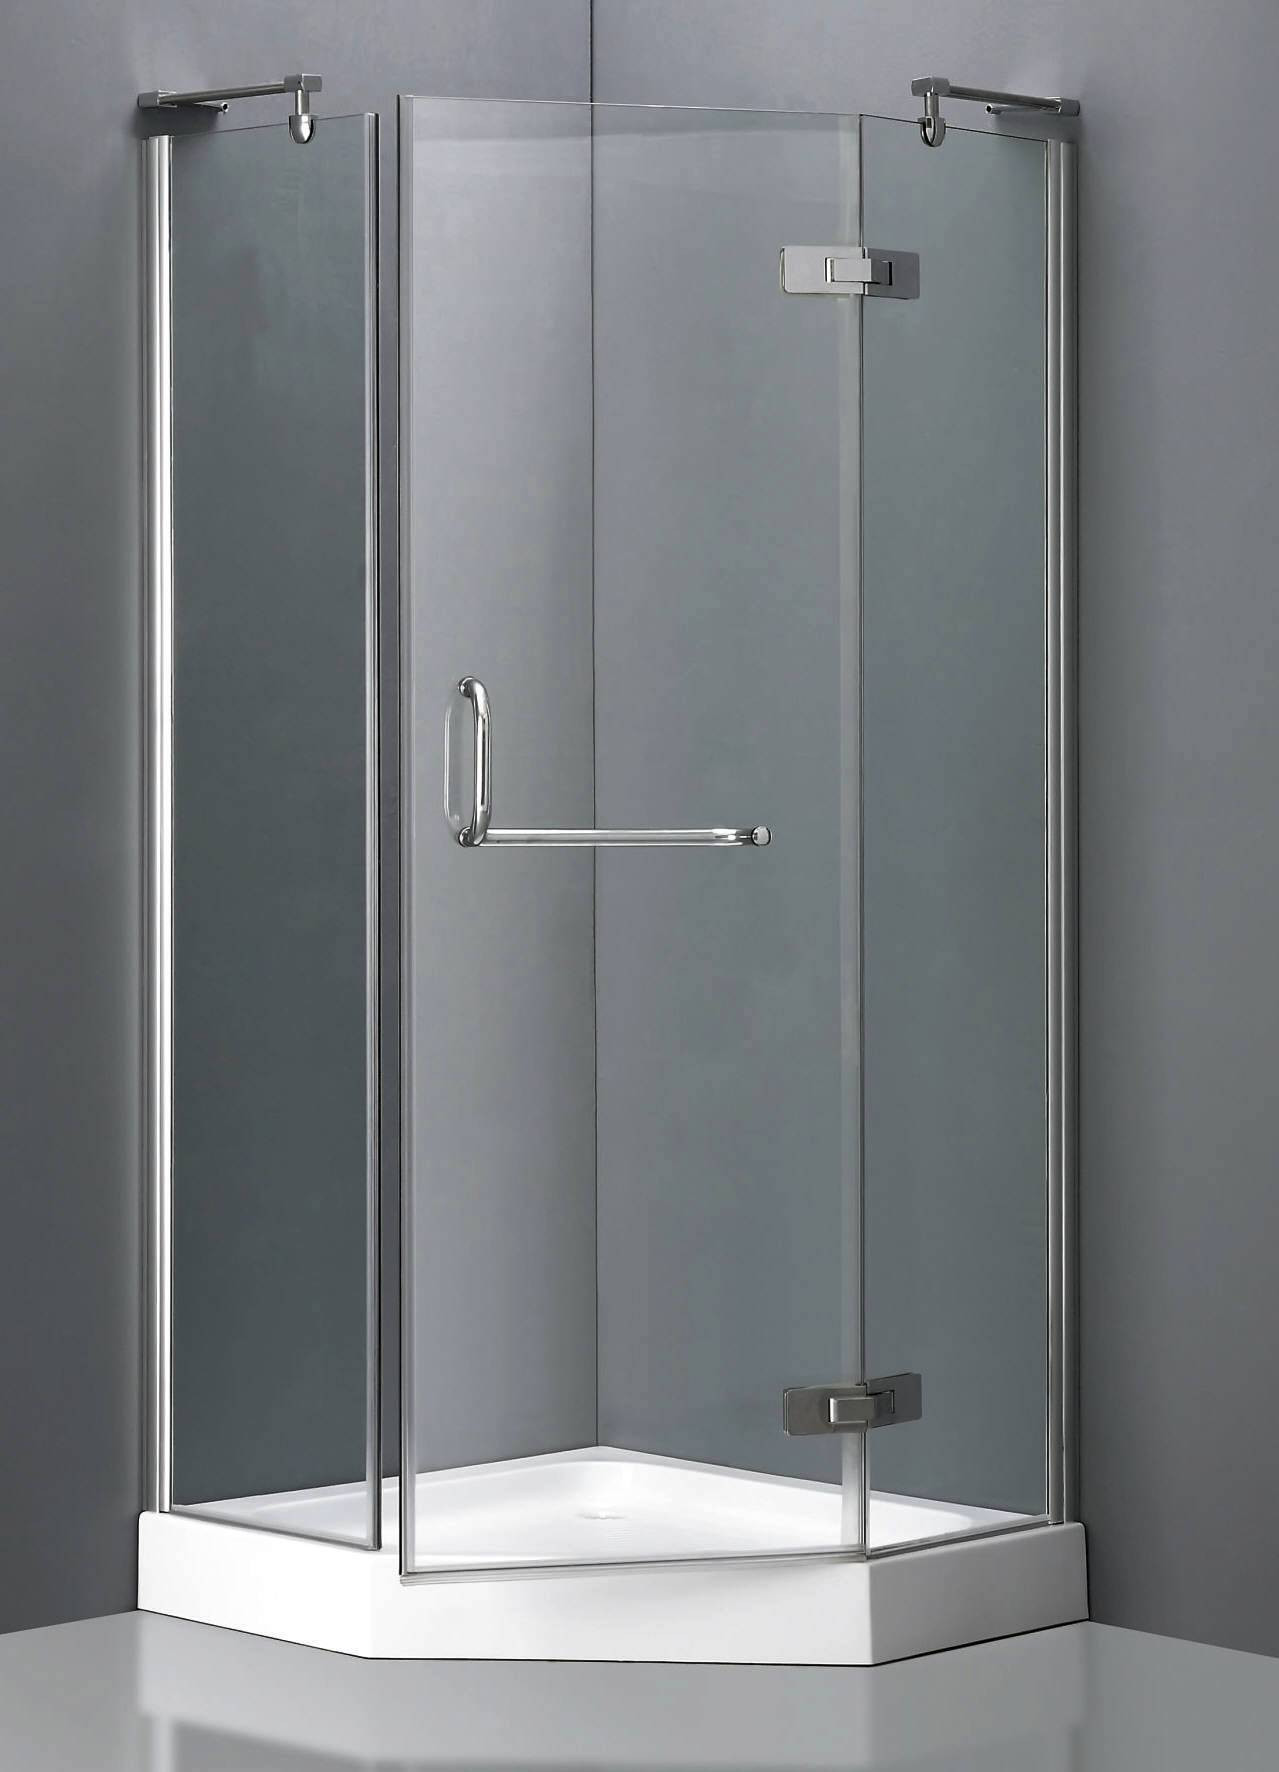 Bathroom Shower Units
 Corner Shower Units for Small Bathroom Solving Space